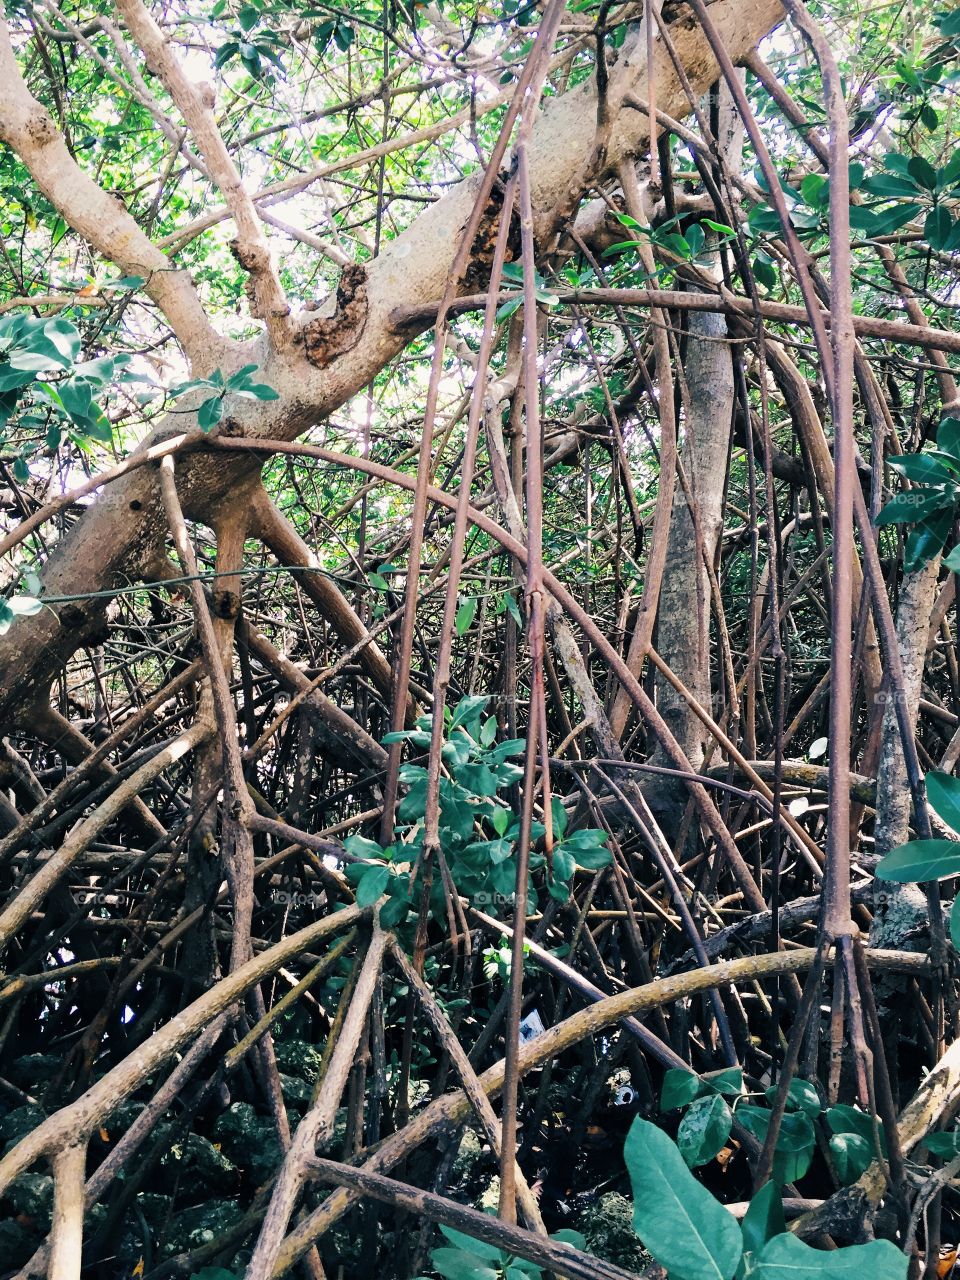 Mangrove swamp